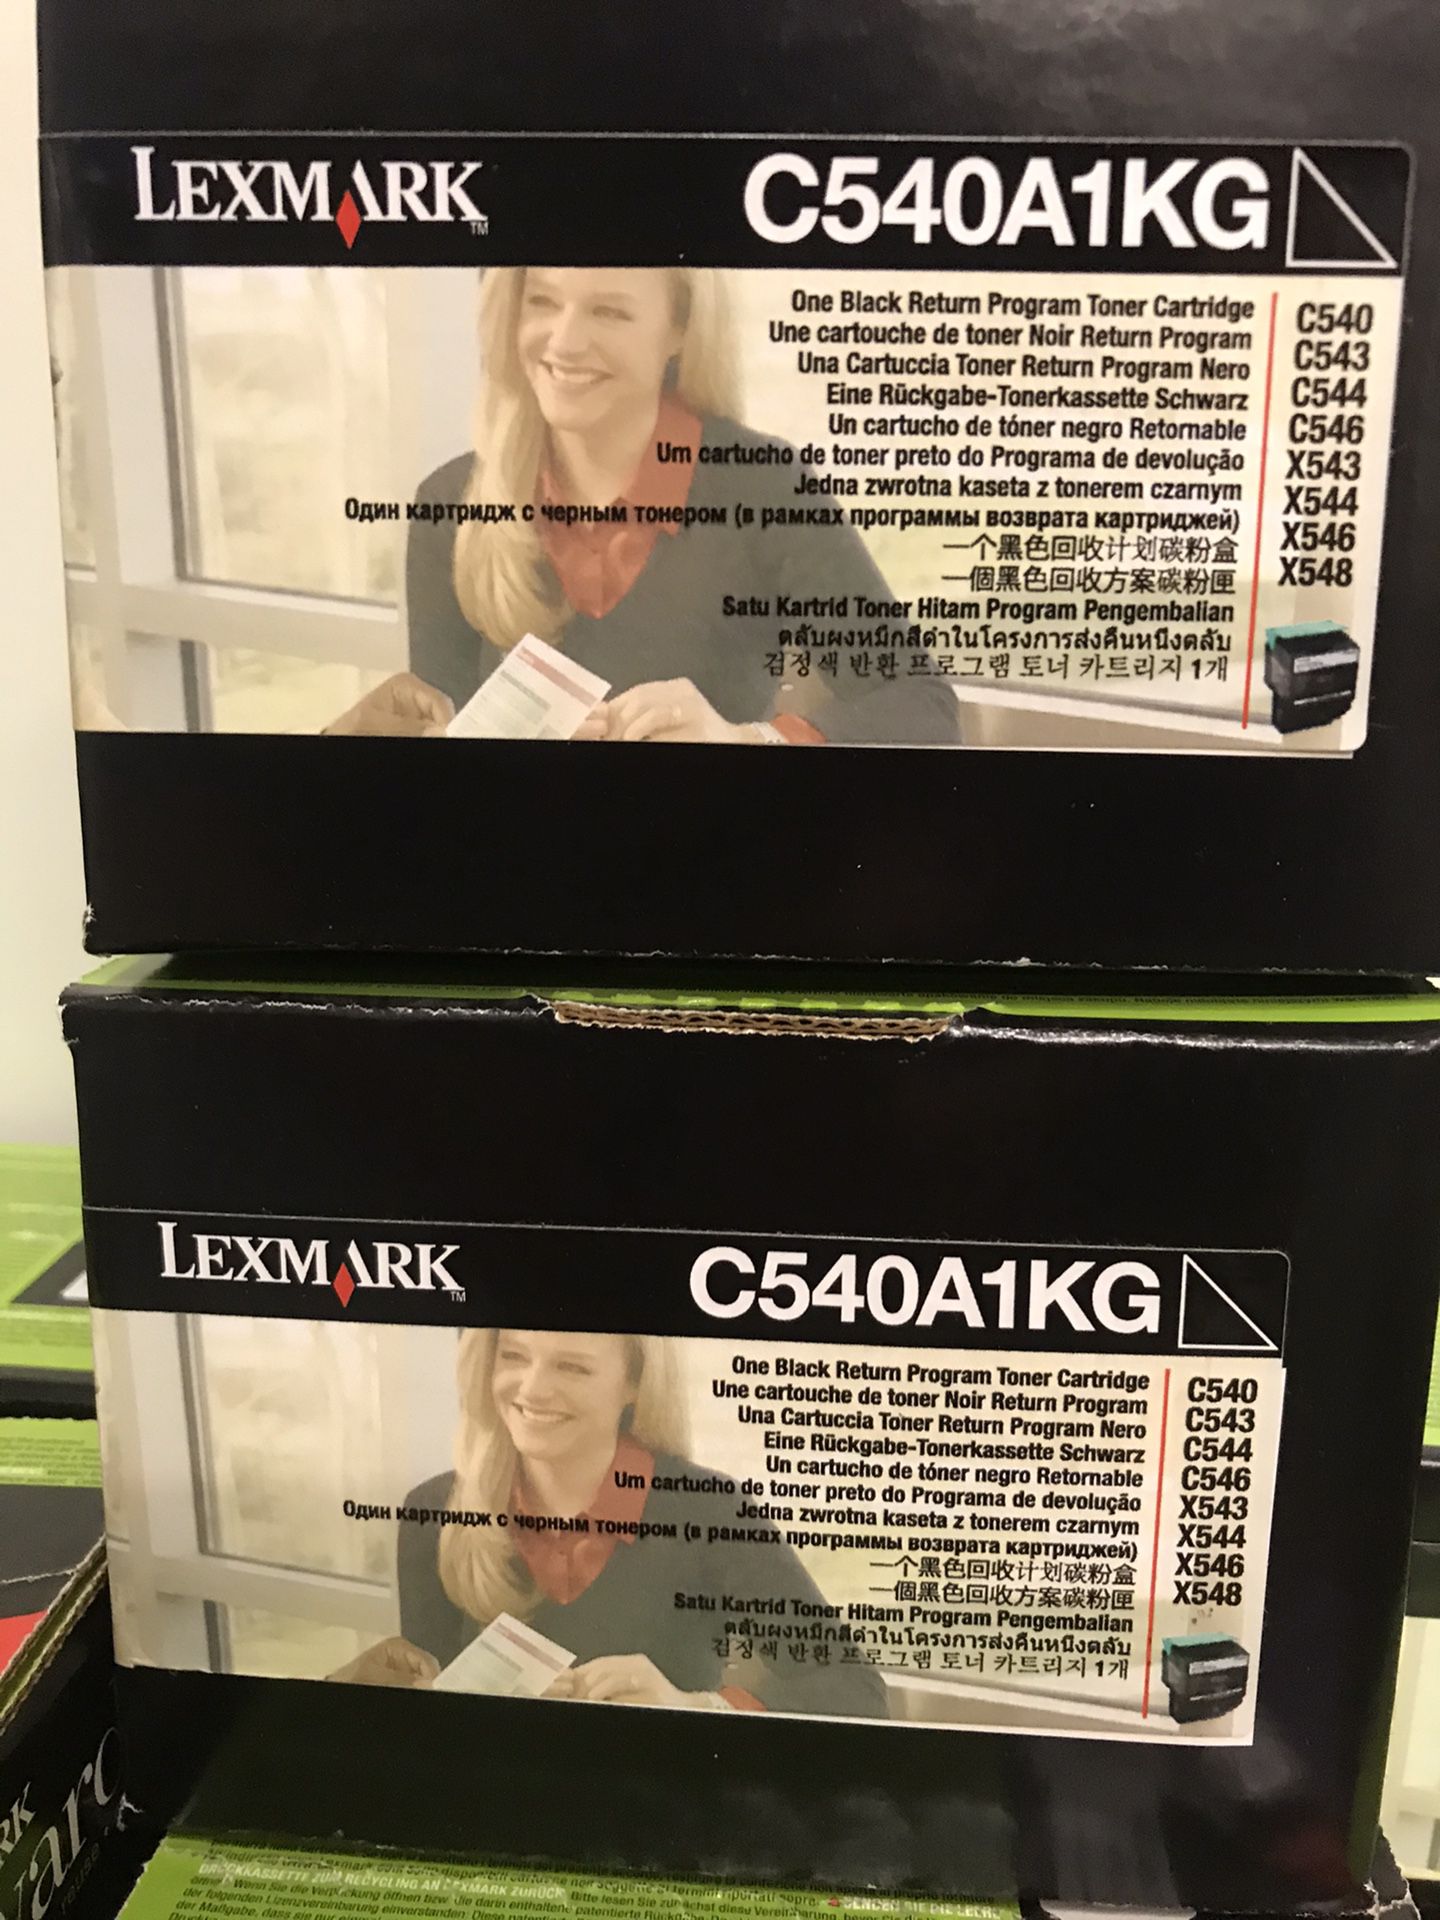 Lexmark C540a1kg Printer Ink Cartridge